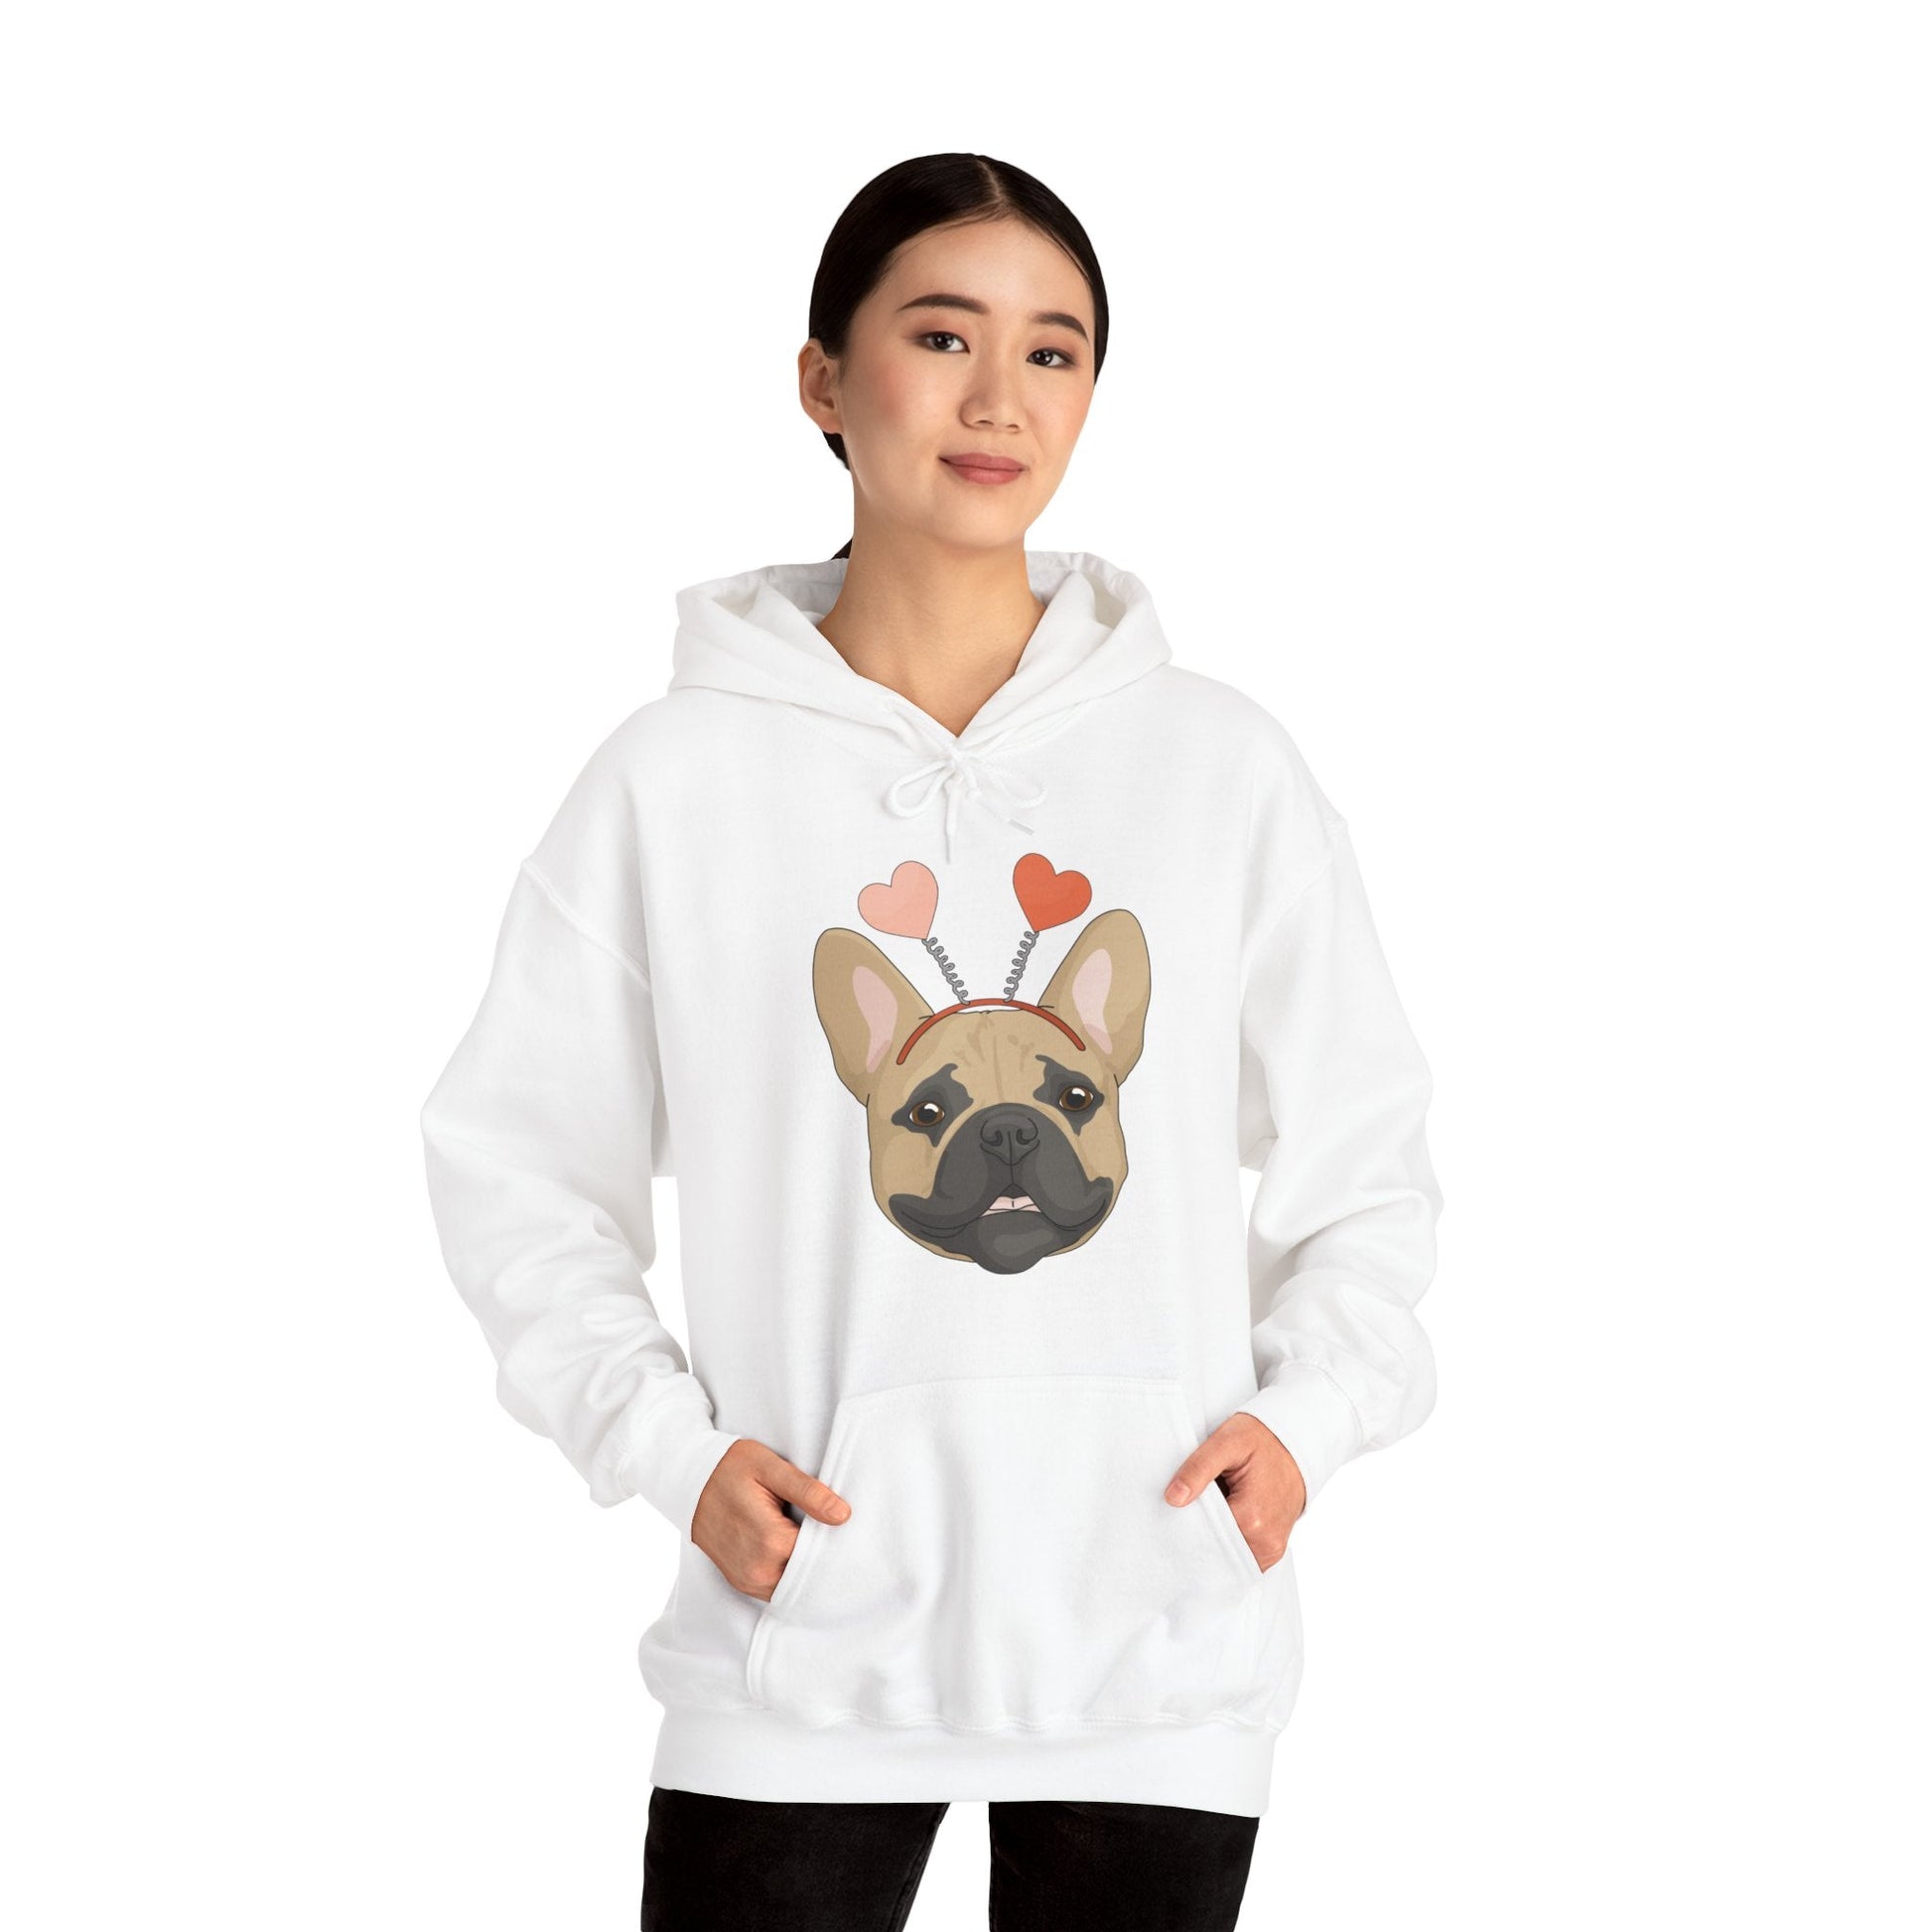 A Very Frenchie Valentine | Hooded Sweatshirt - Detezi Designs-24304421838202500253